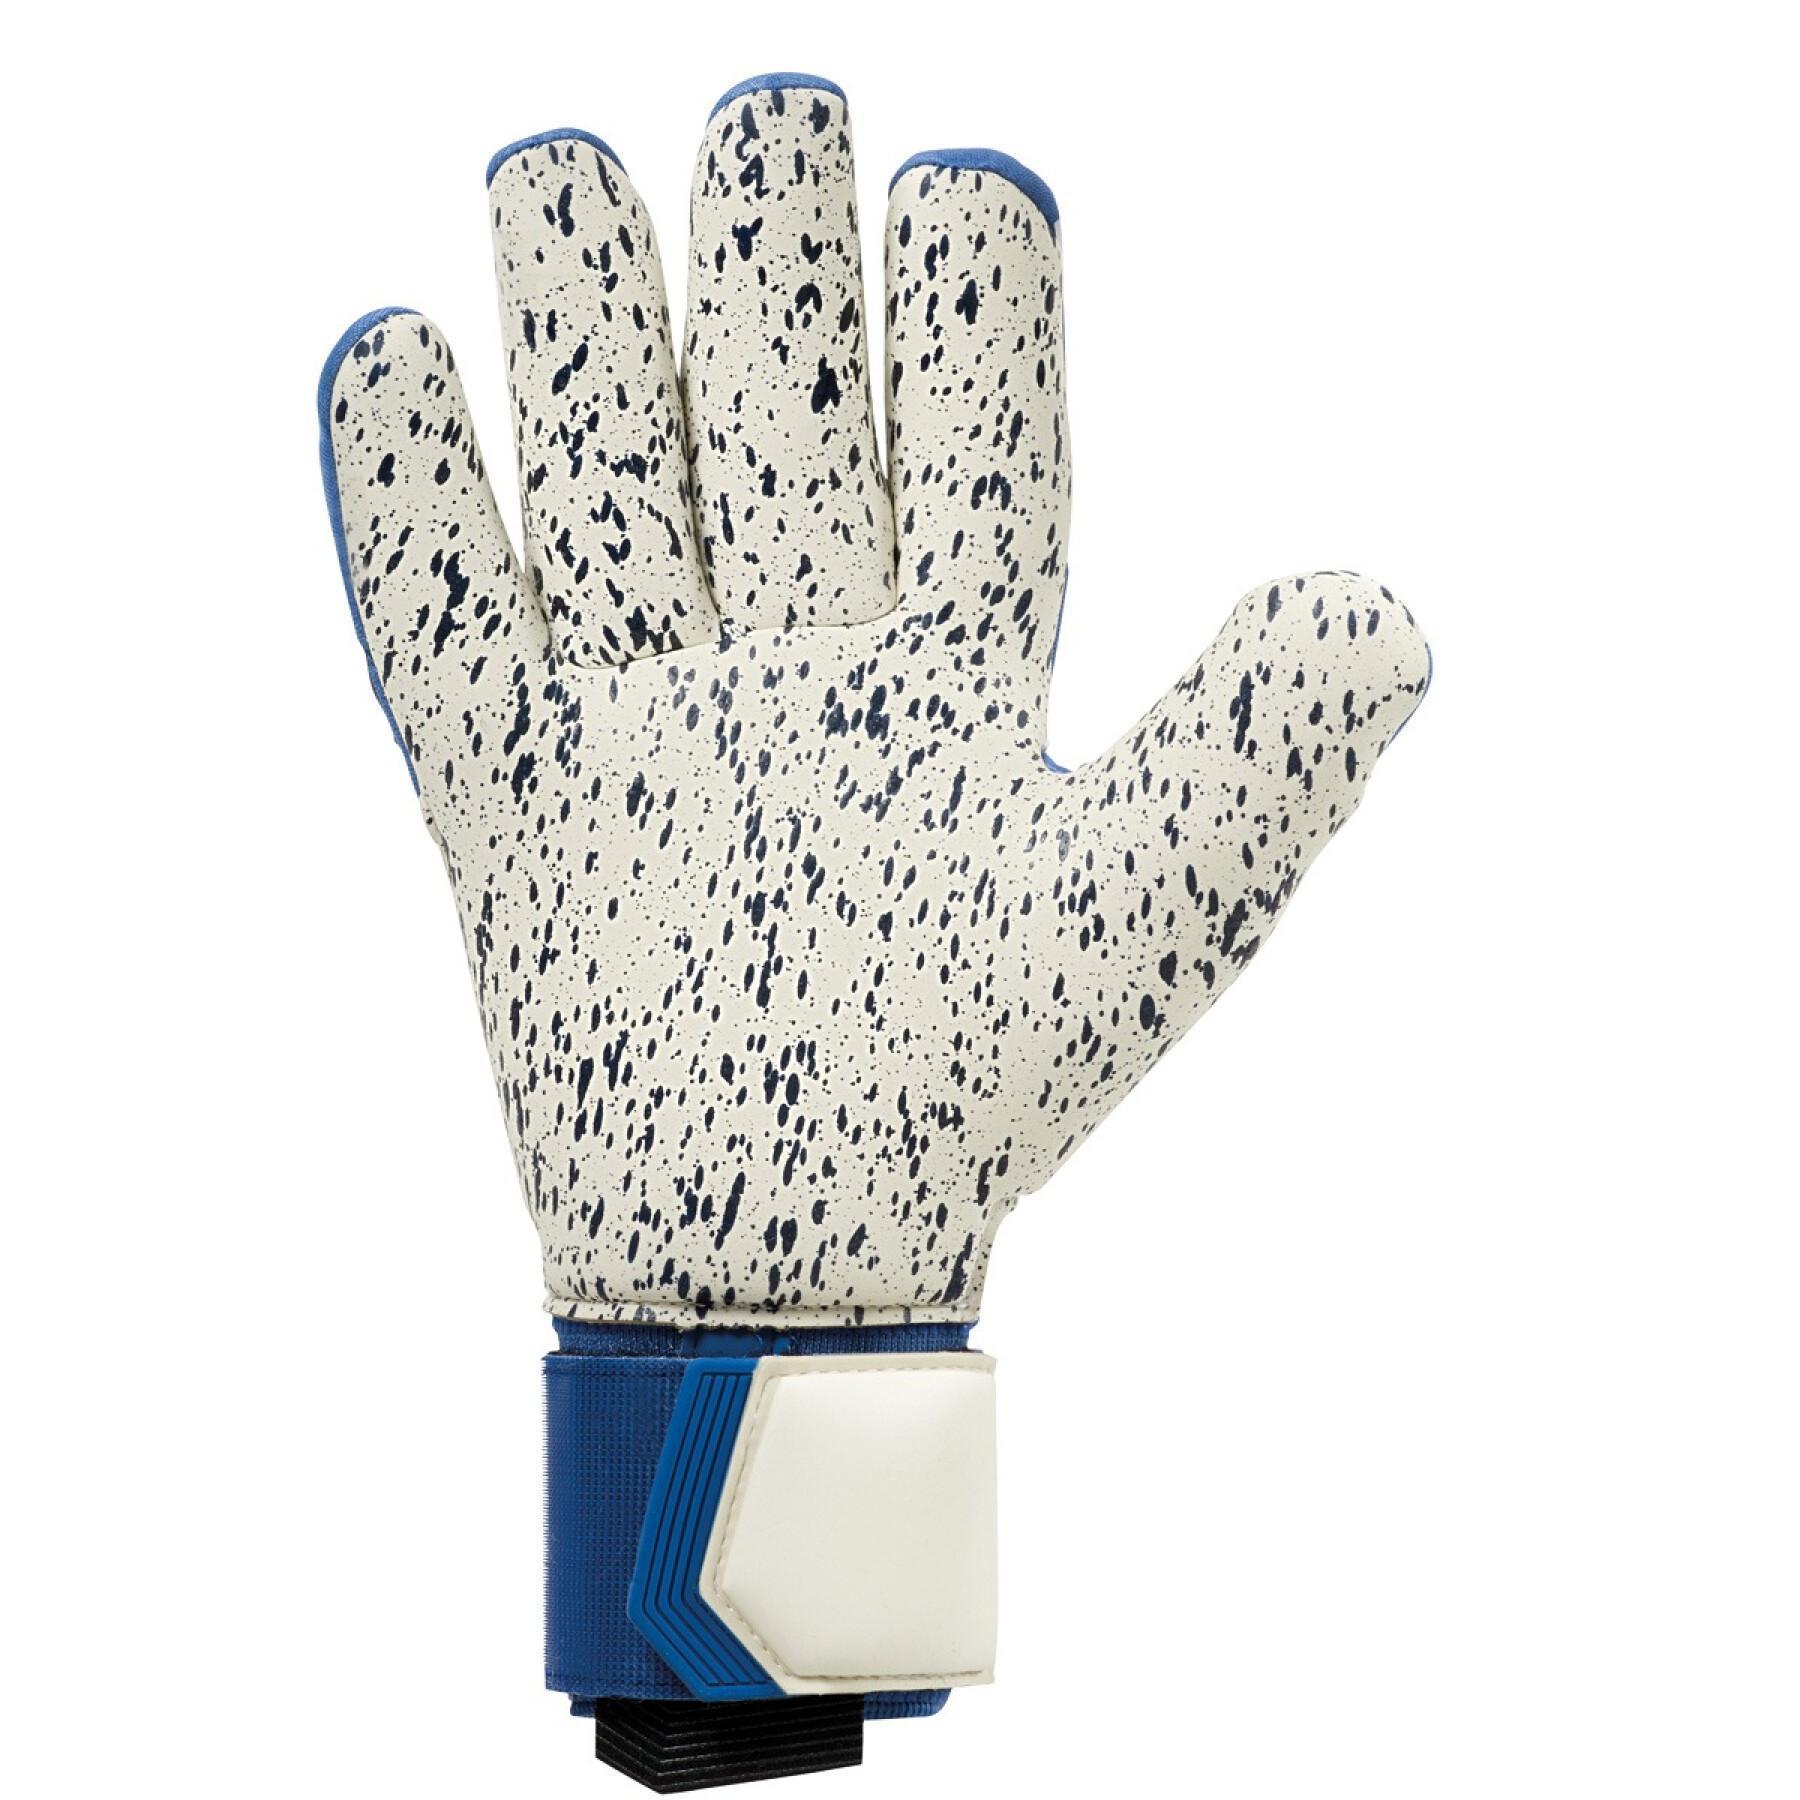 Goalkeeper gloves Uhlsport Gyperact Supergrip Finger Surround